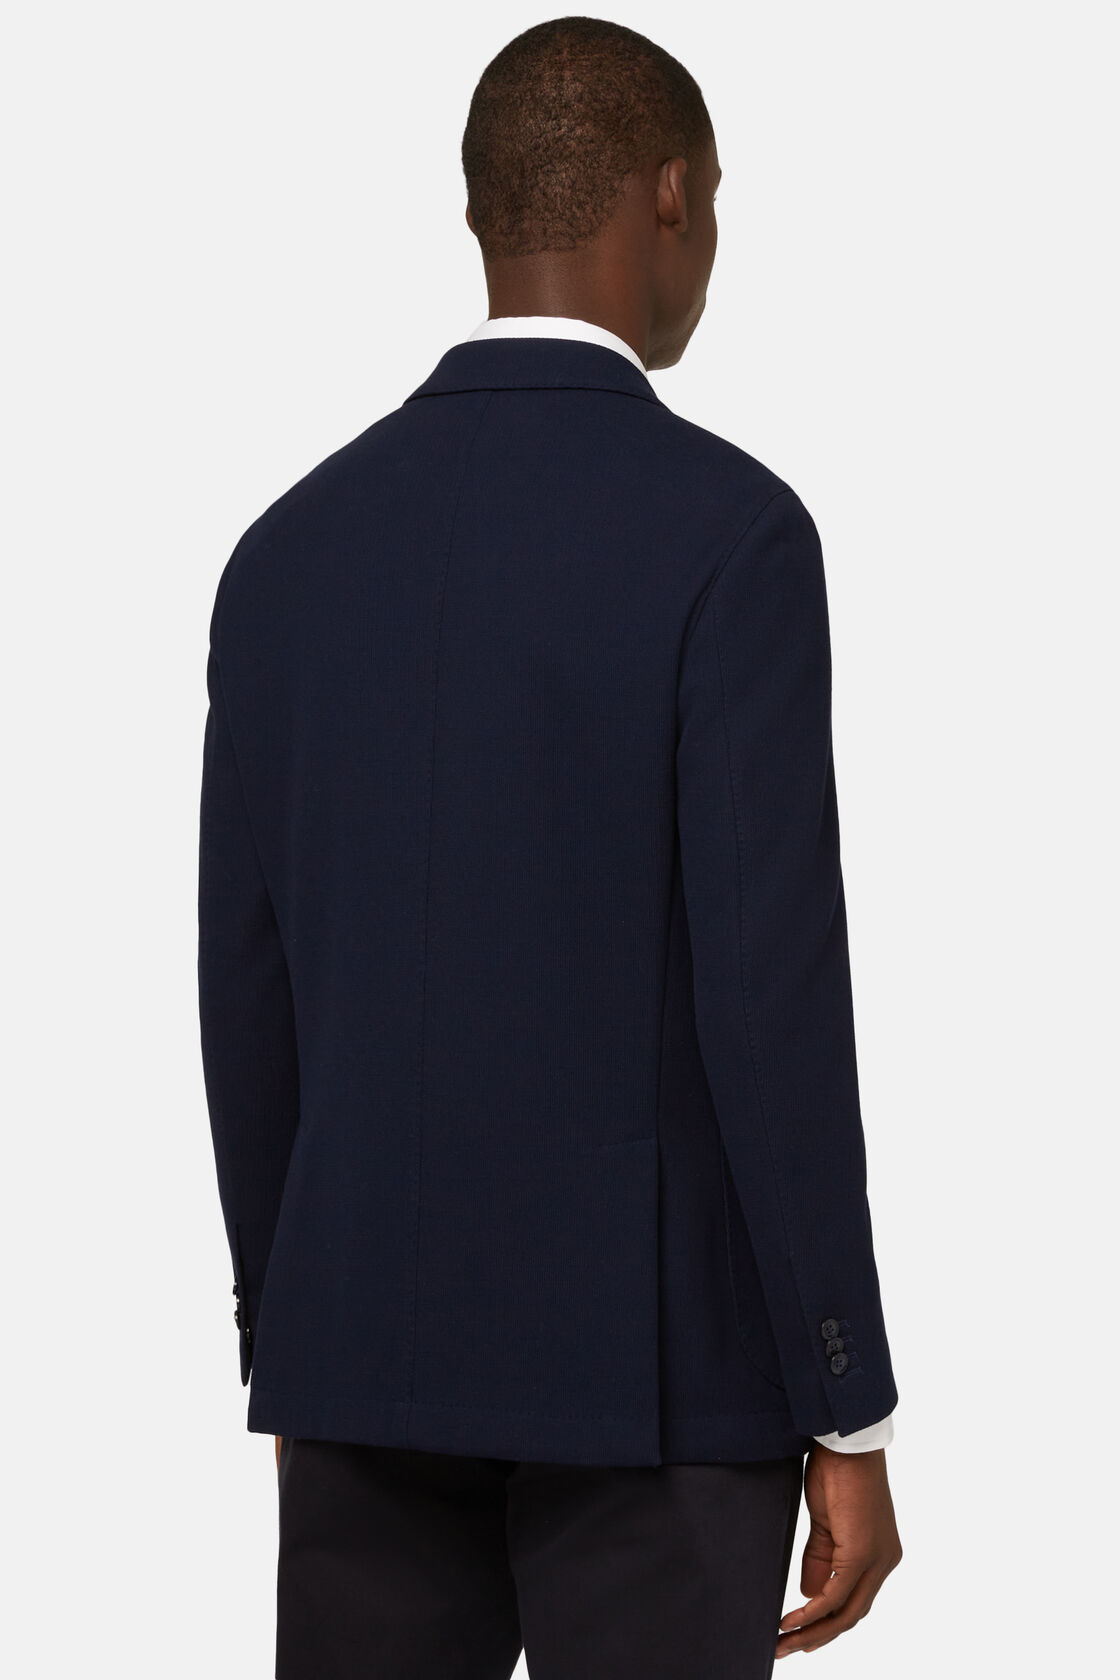 Navy Cotton B Jersey Jacket, Navy blue, hi-res